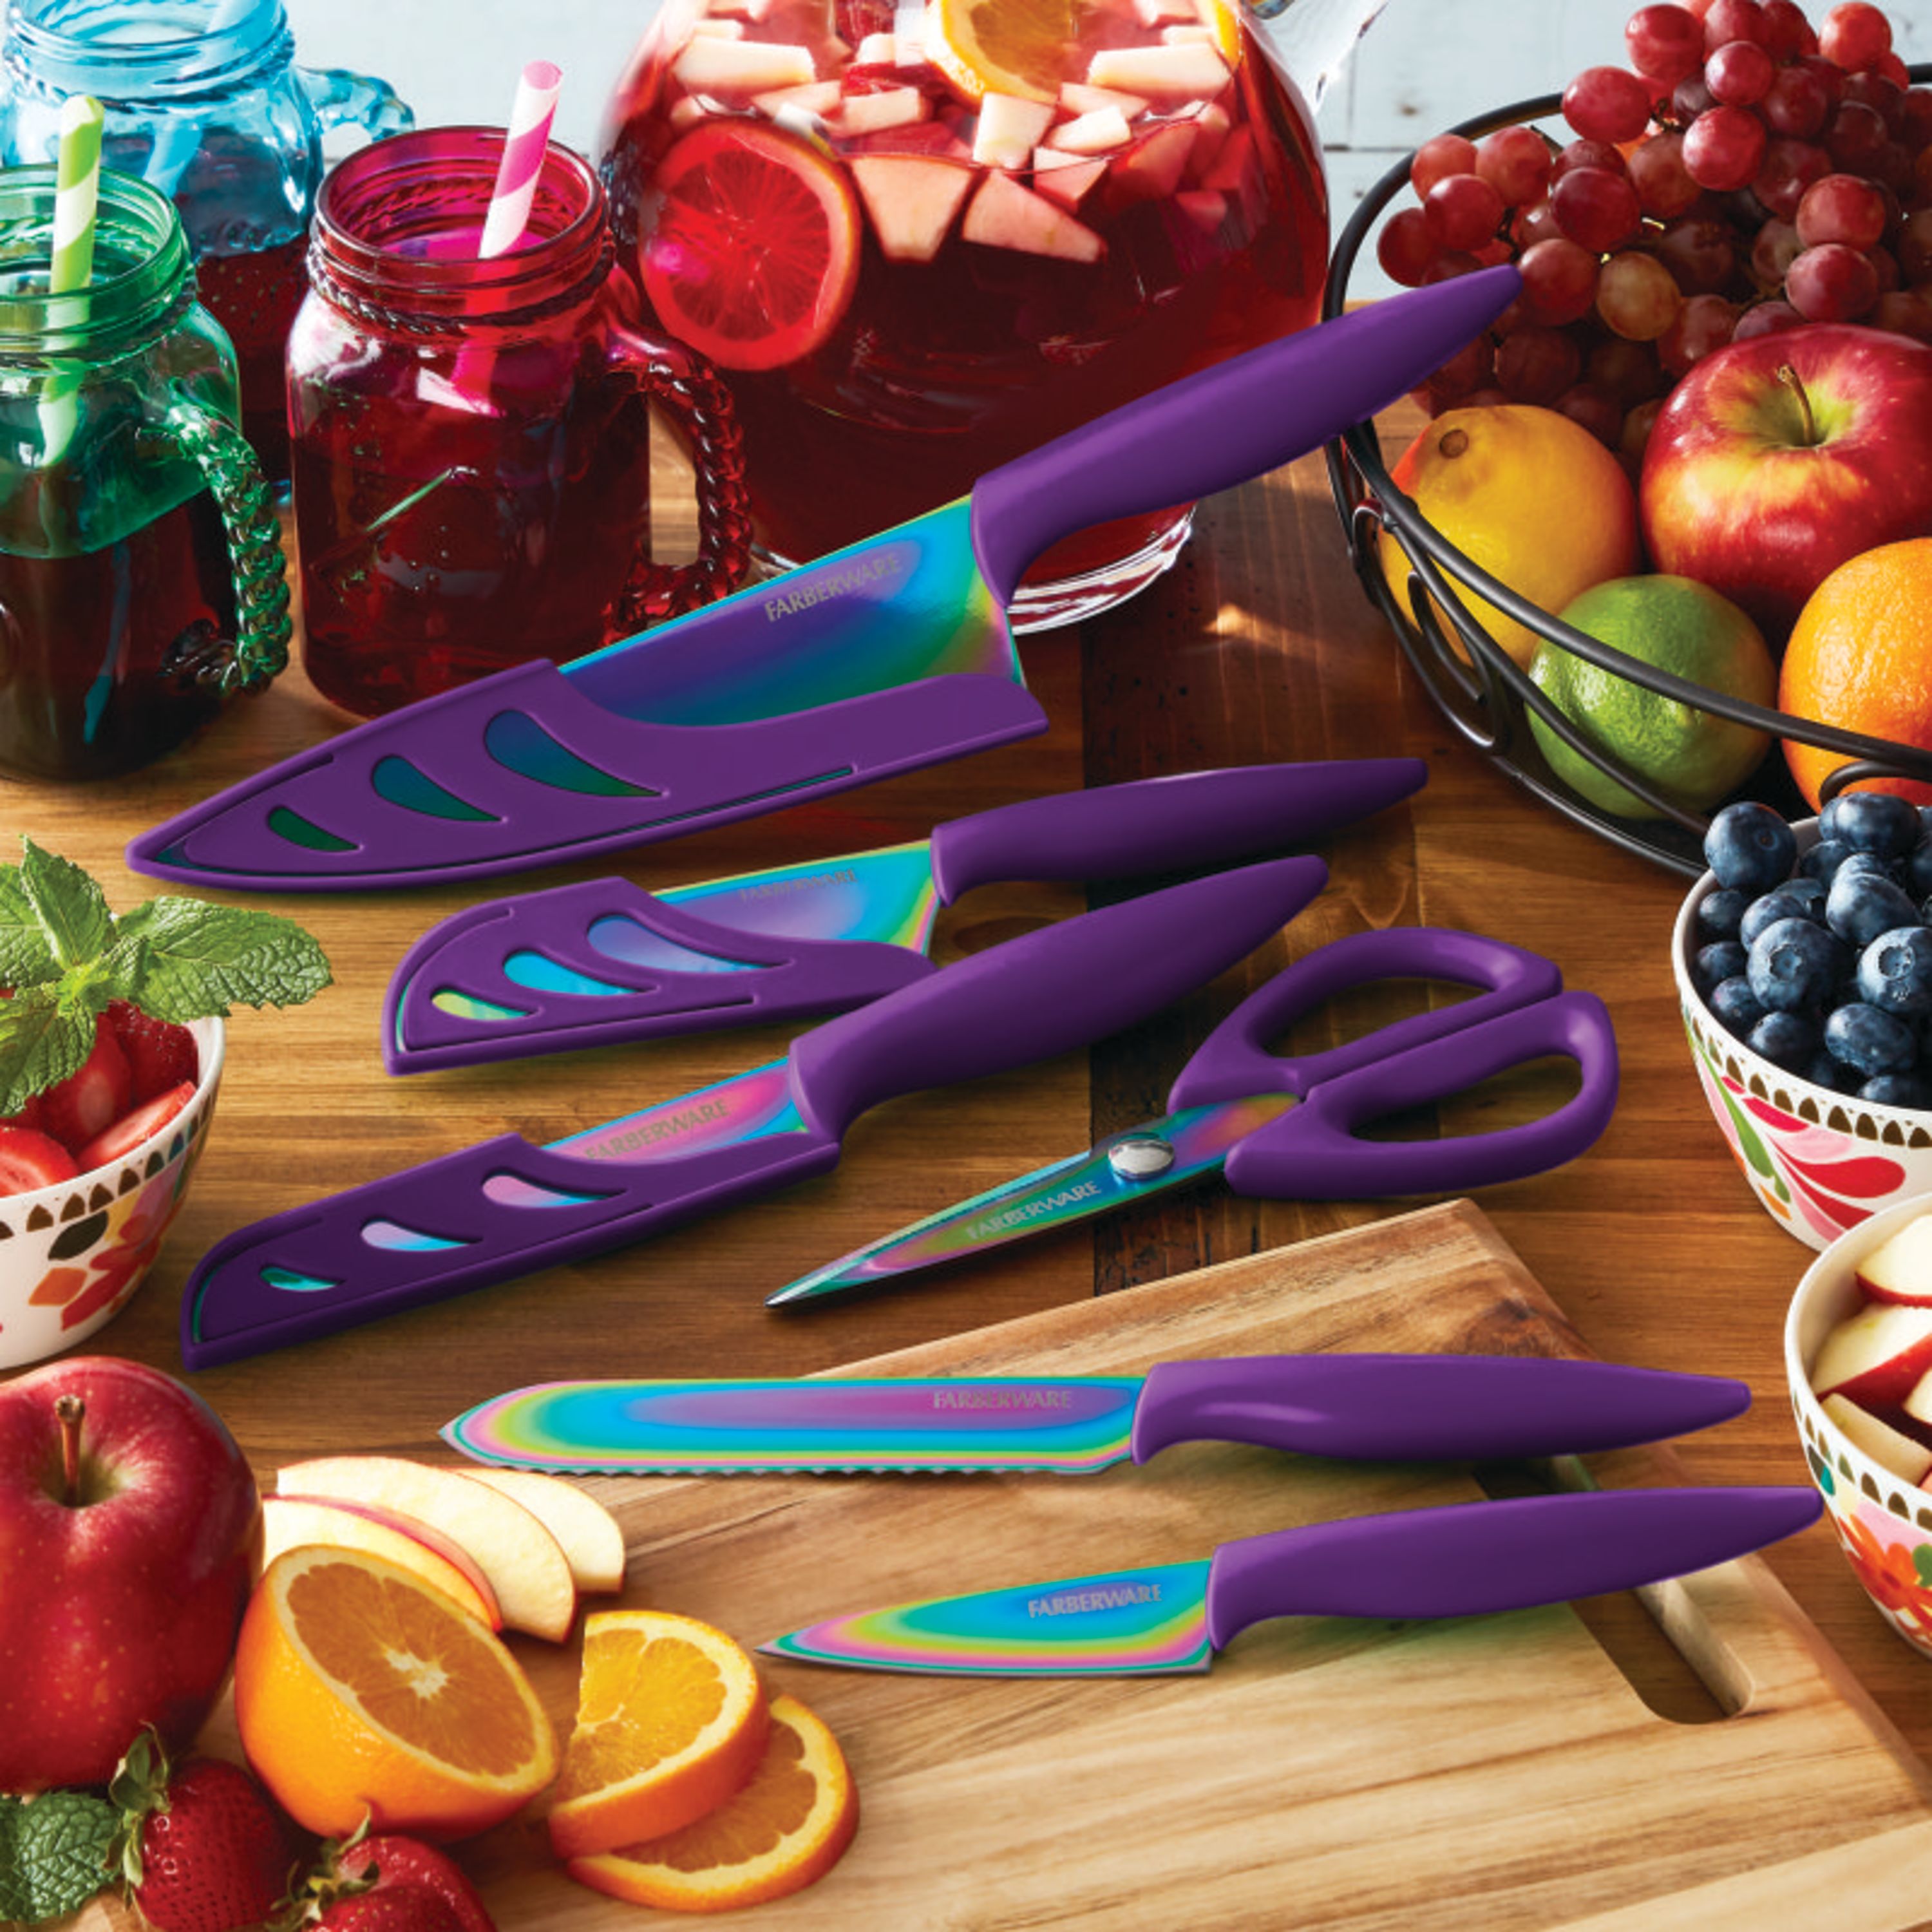 Farberware 11-piece Dishwasher-Safe Rainbow Titanium Cutlery Set in Purple - image 3 of 11